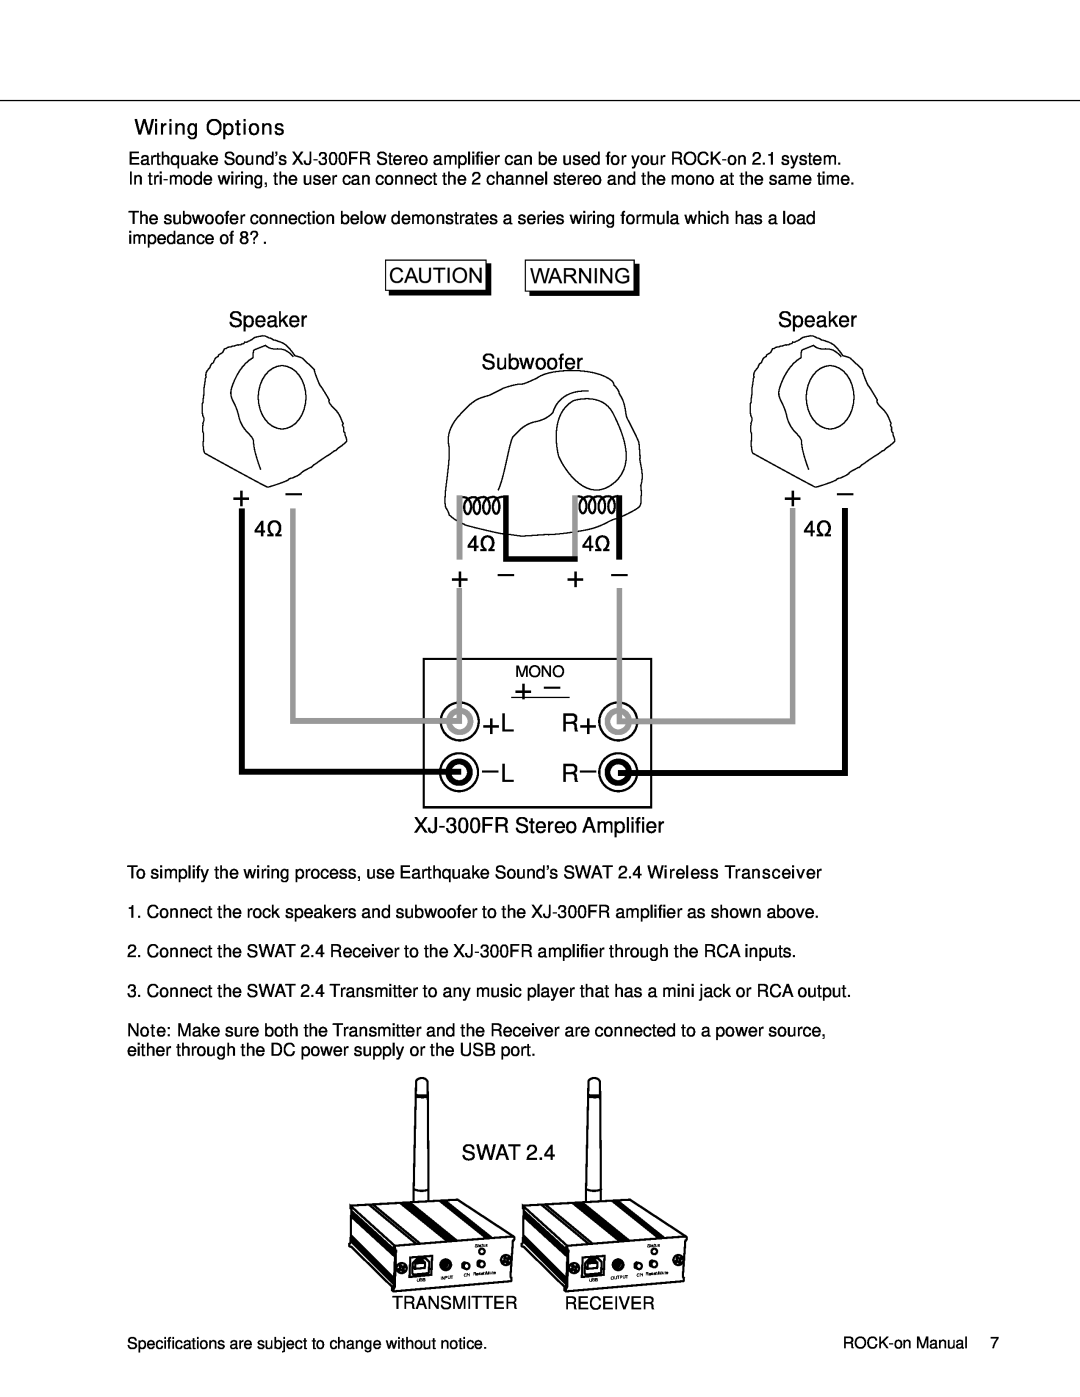 Earthquake Sound 10D, 52 user manual Wiring Options, Speaker, Subwoofer, XJ-300FRStereo Amplifier, Swat 